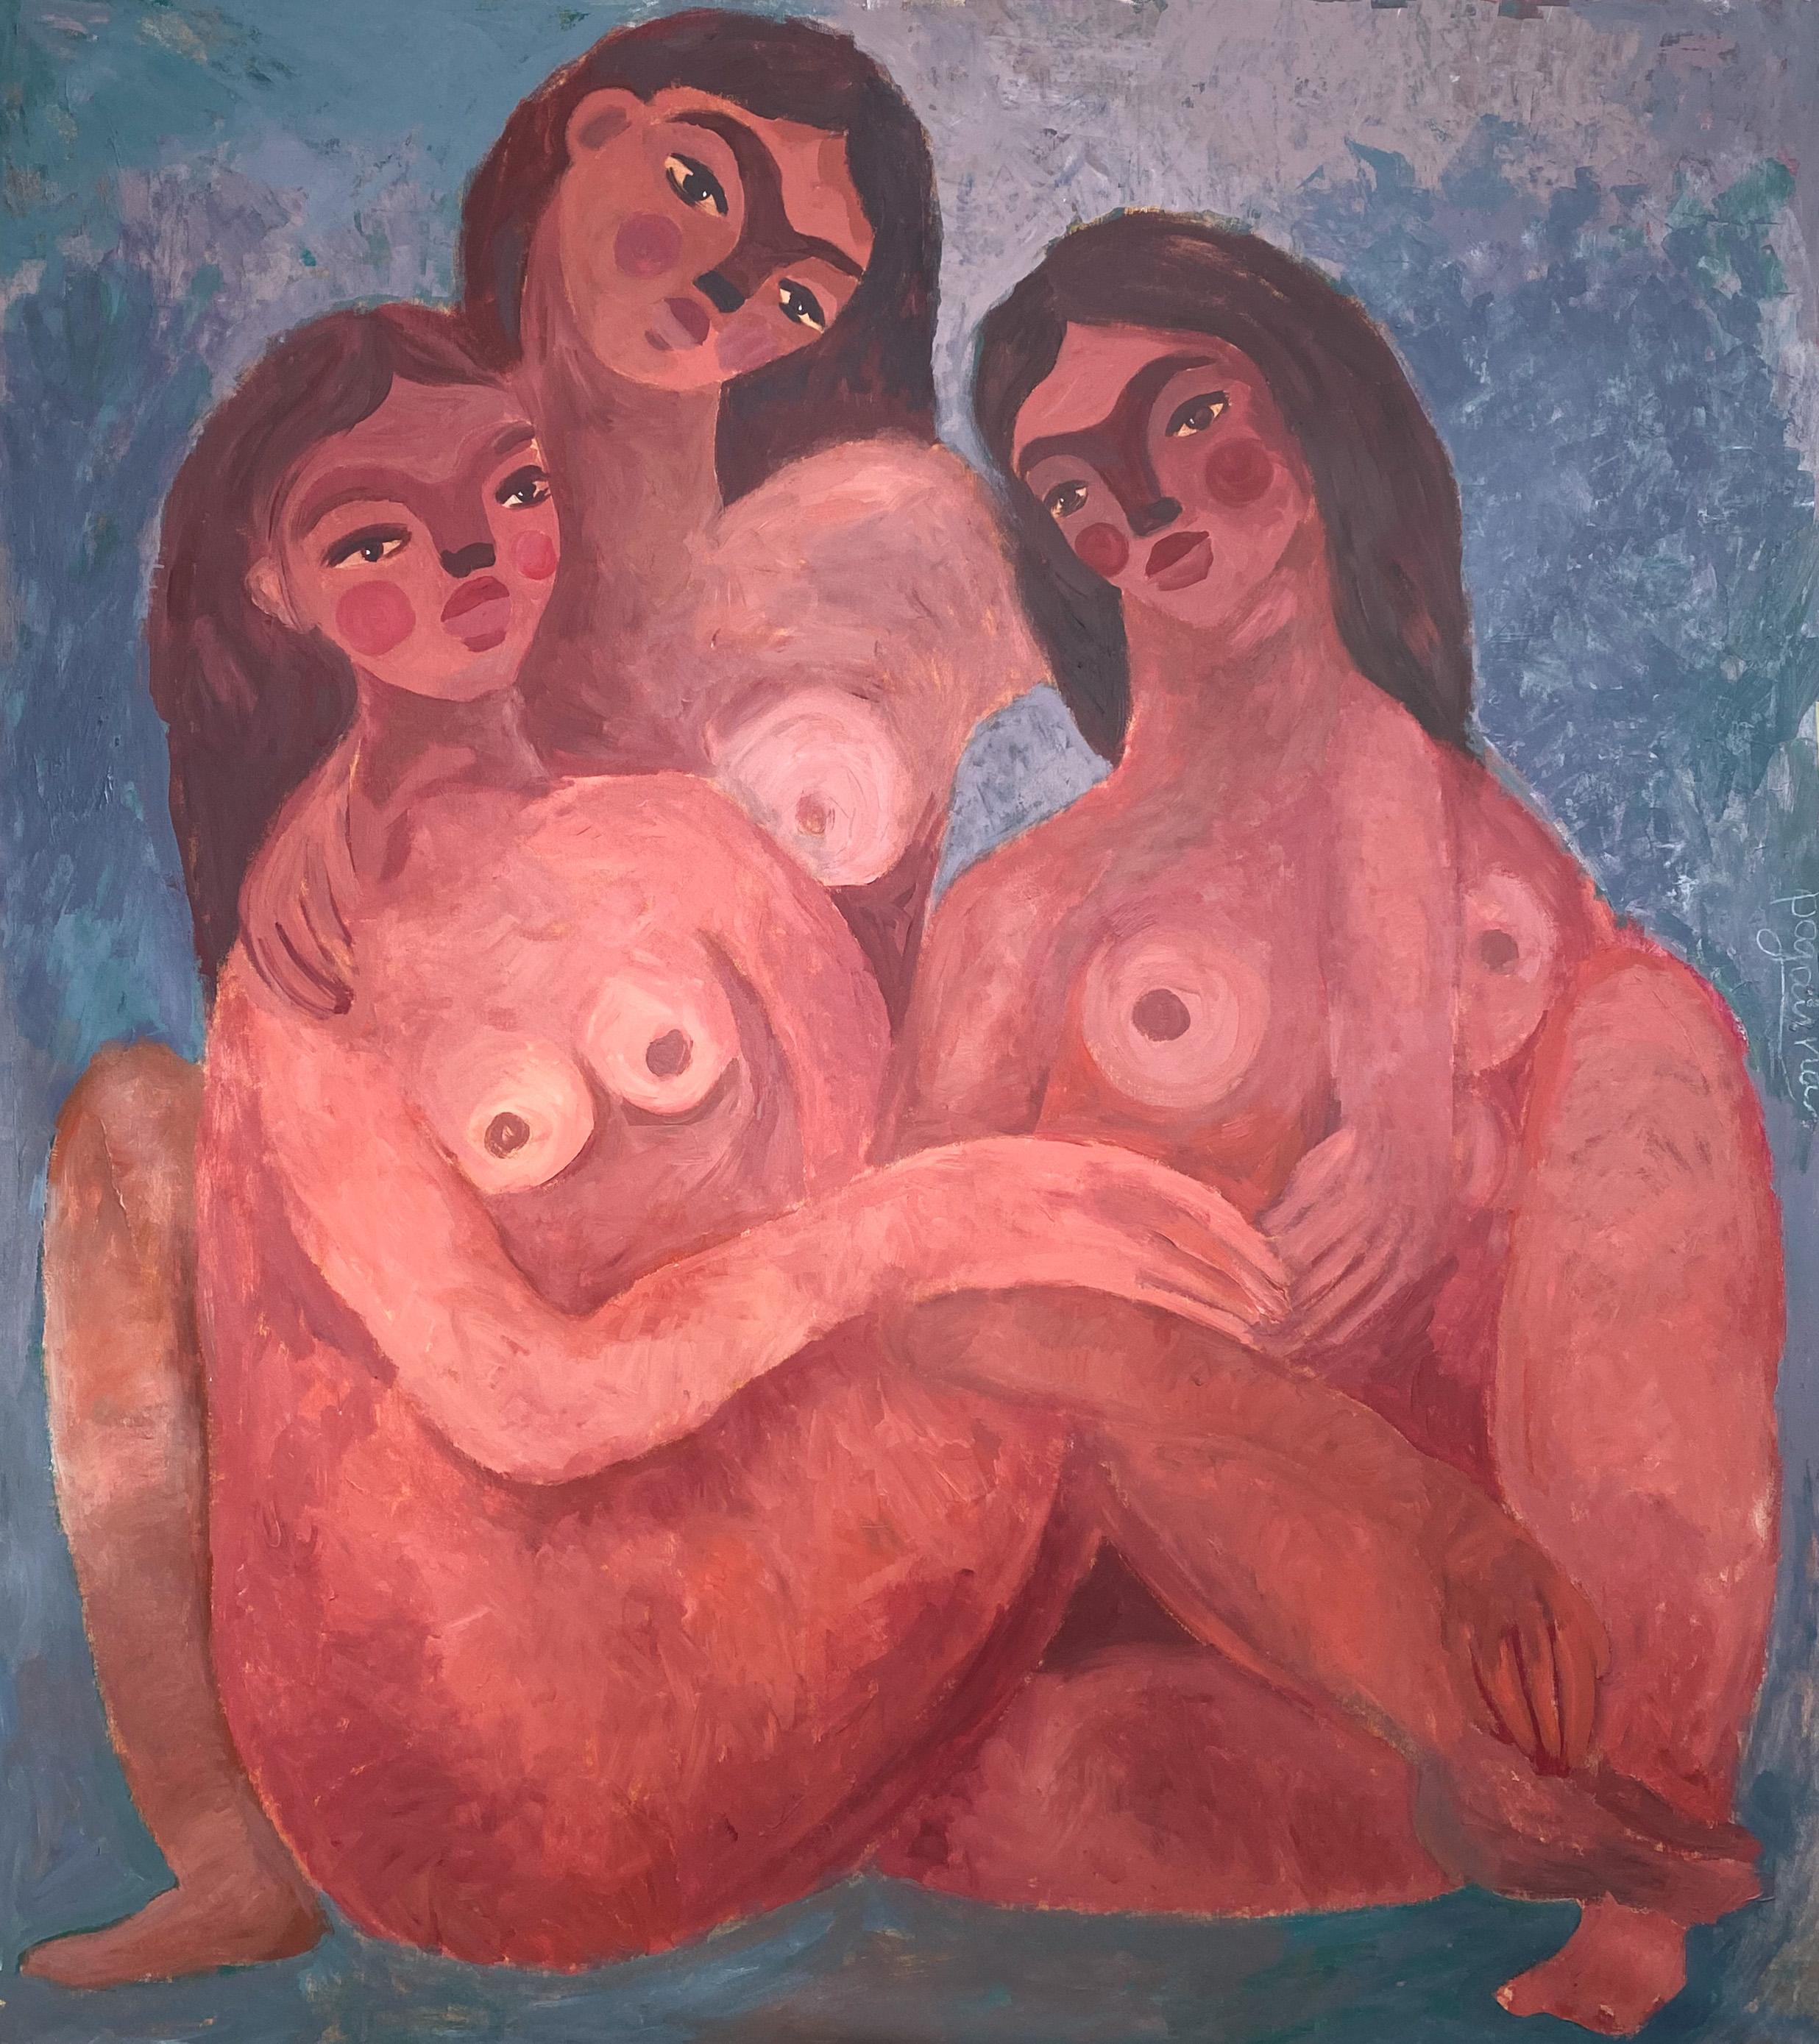 Naked sincerity - Painting by Dasha Pogodina